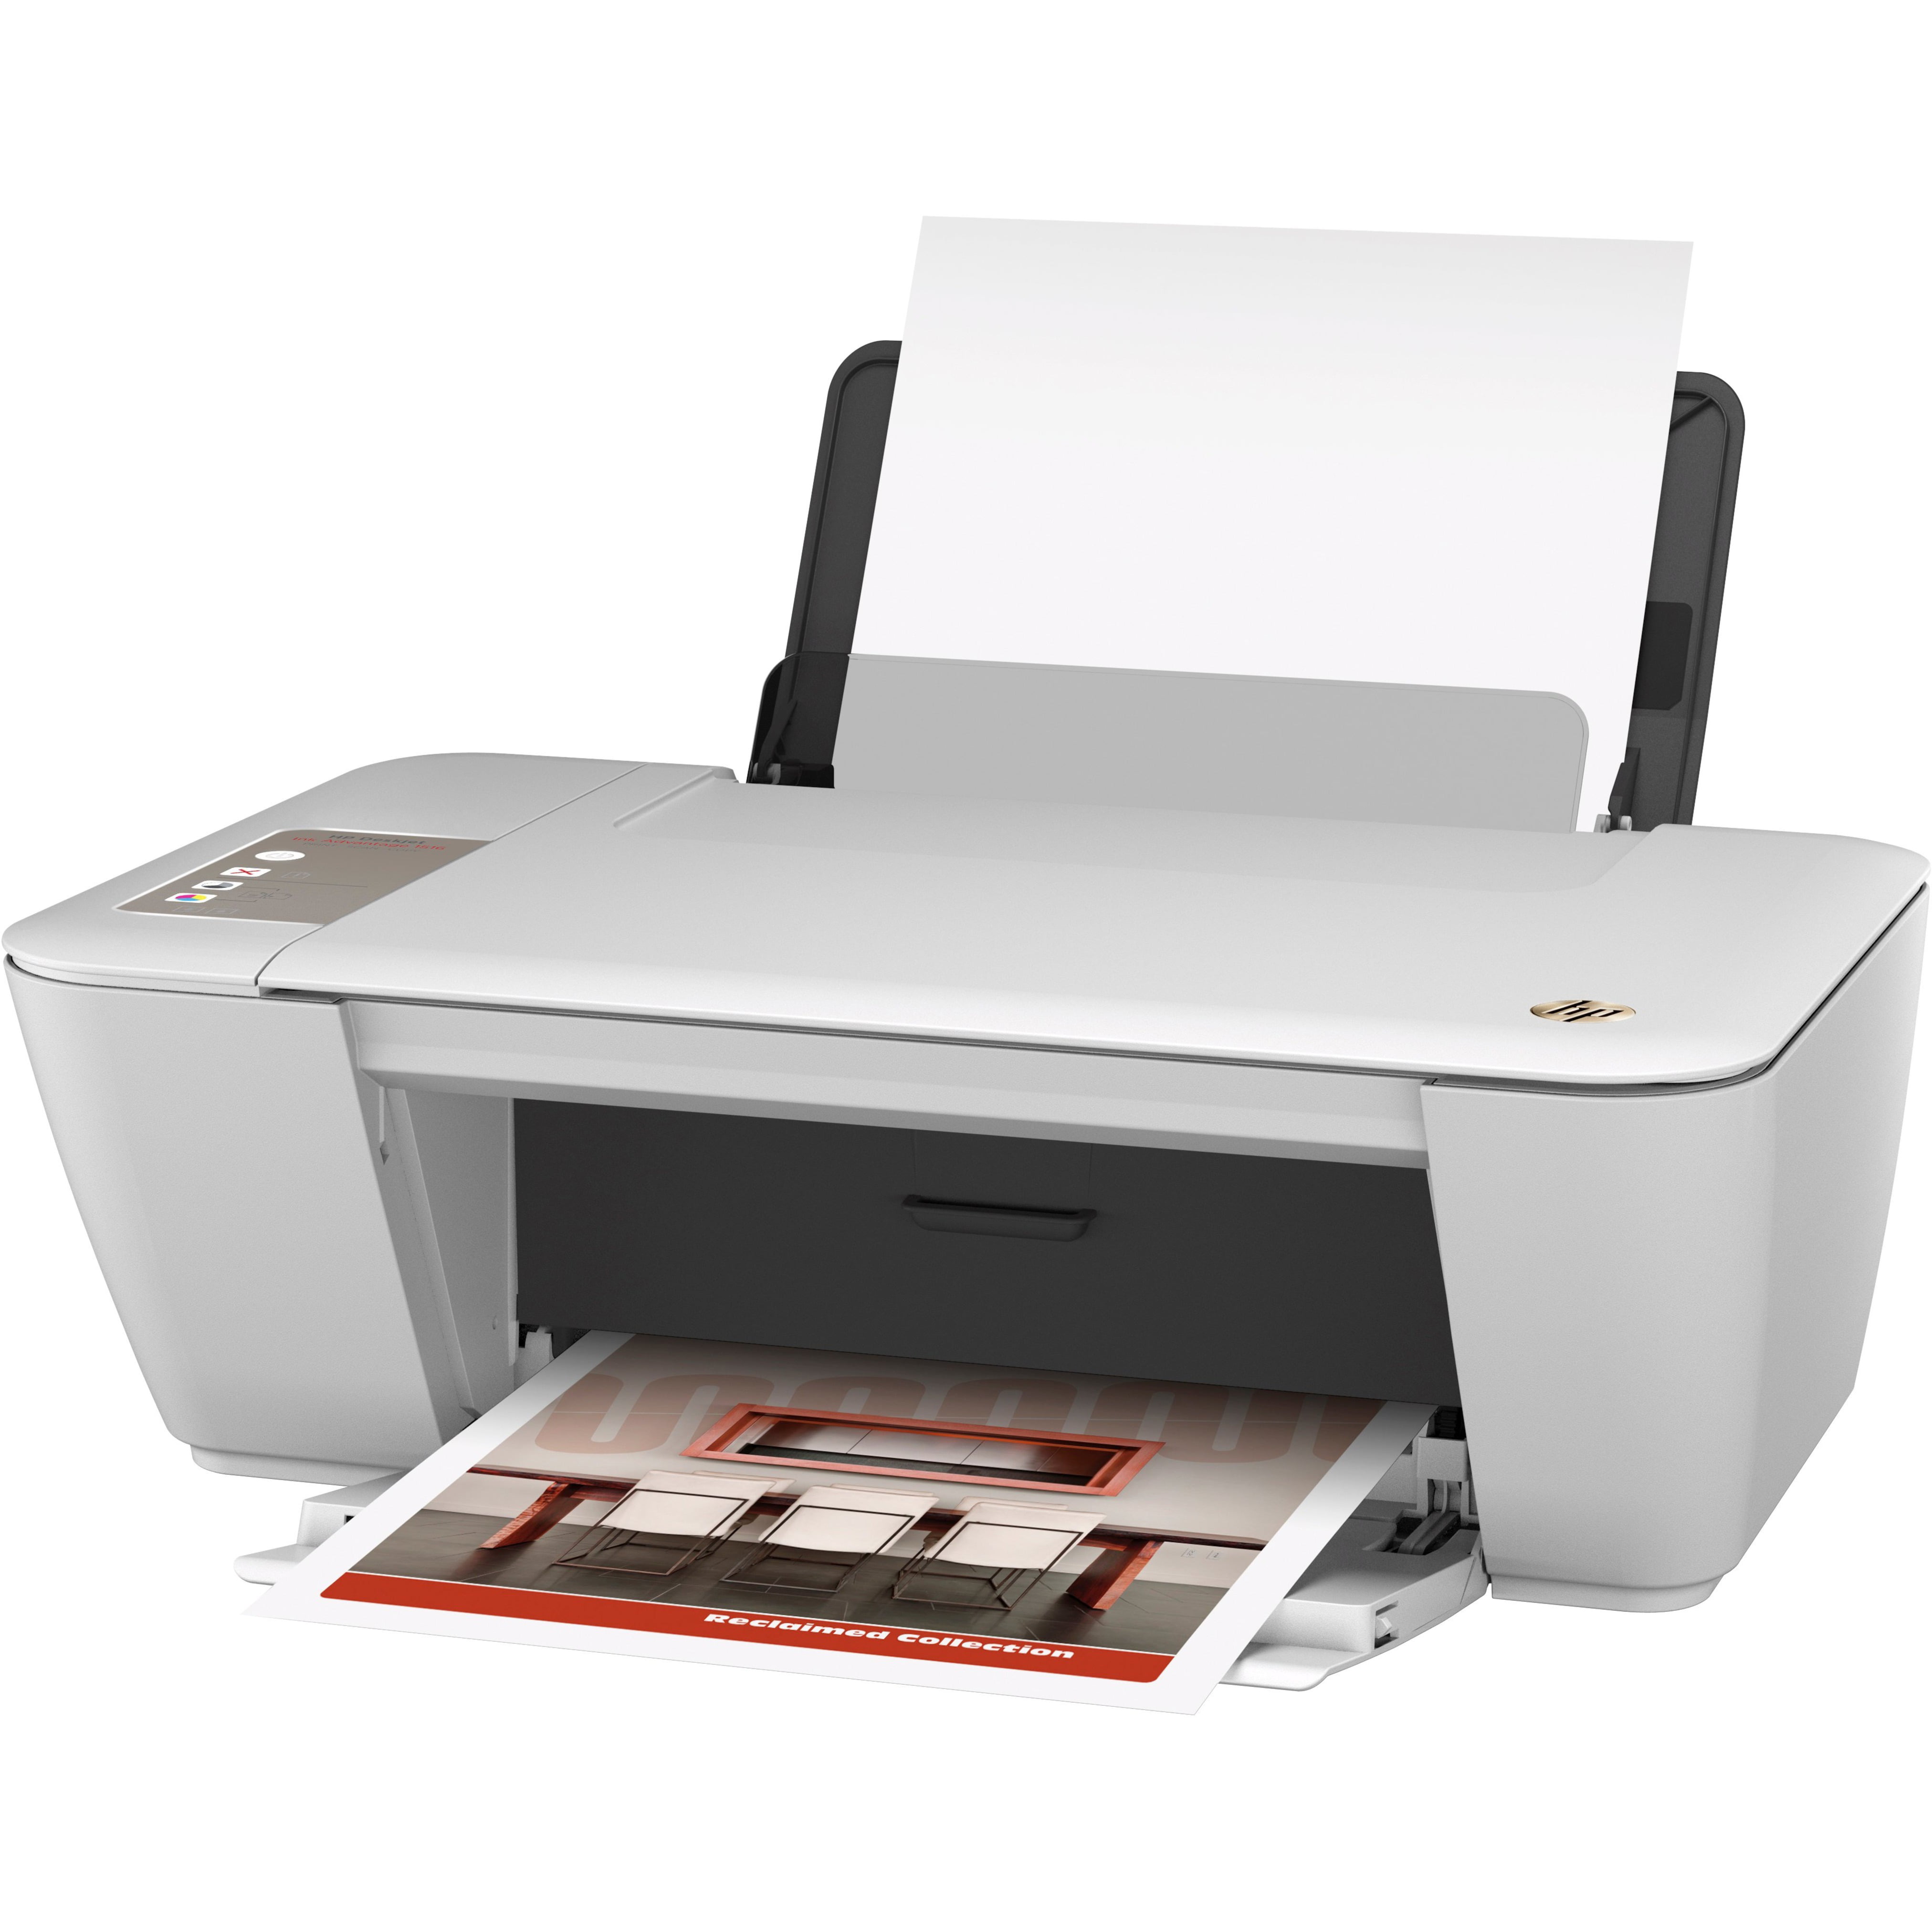 HP Deskjet 2540 Printer Paper Feed Problem Fix 2541 2542 2543 2544 2545  2546 2547 